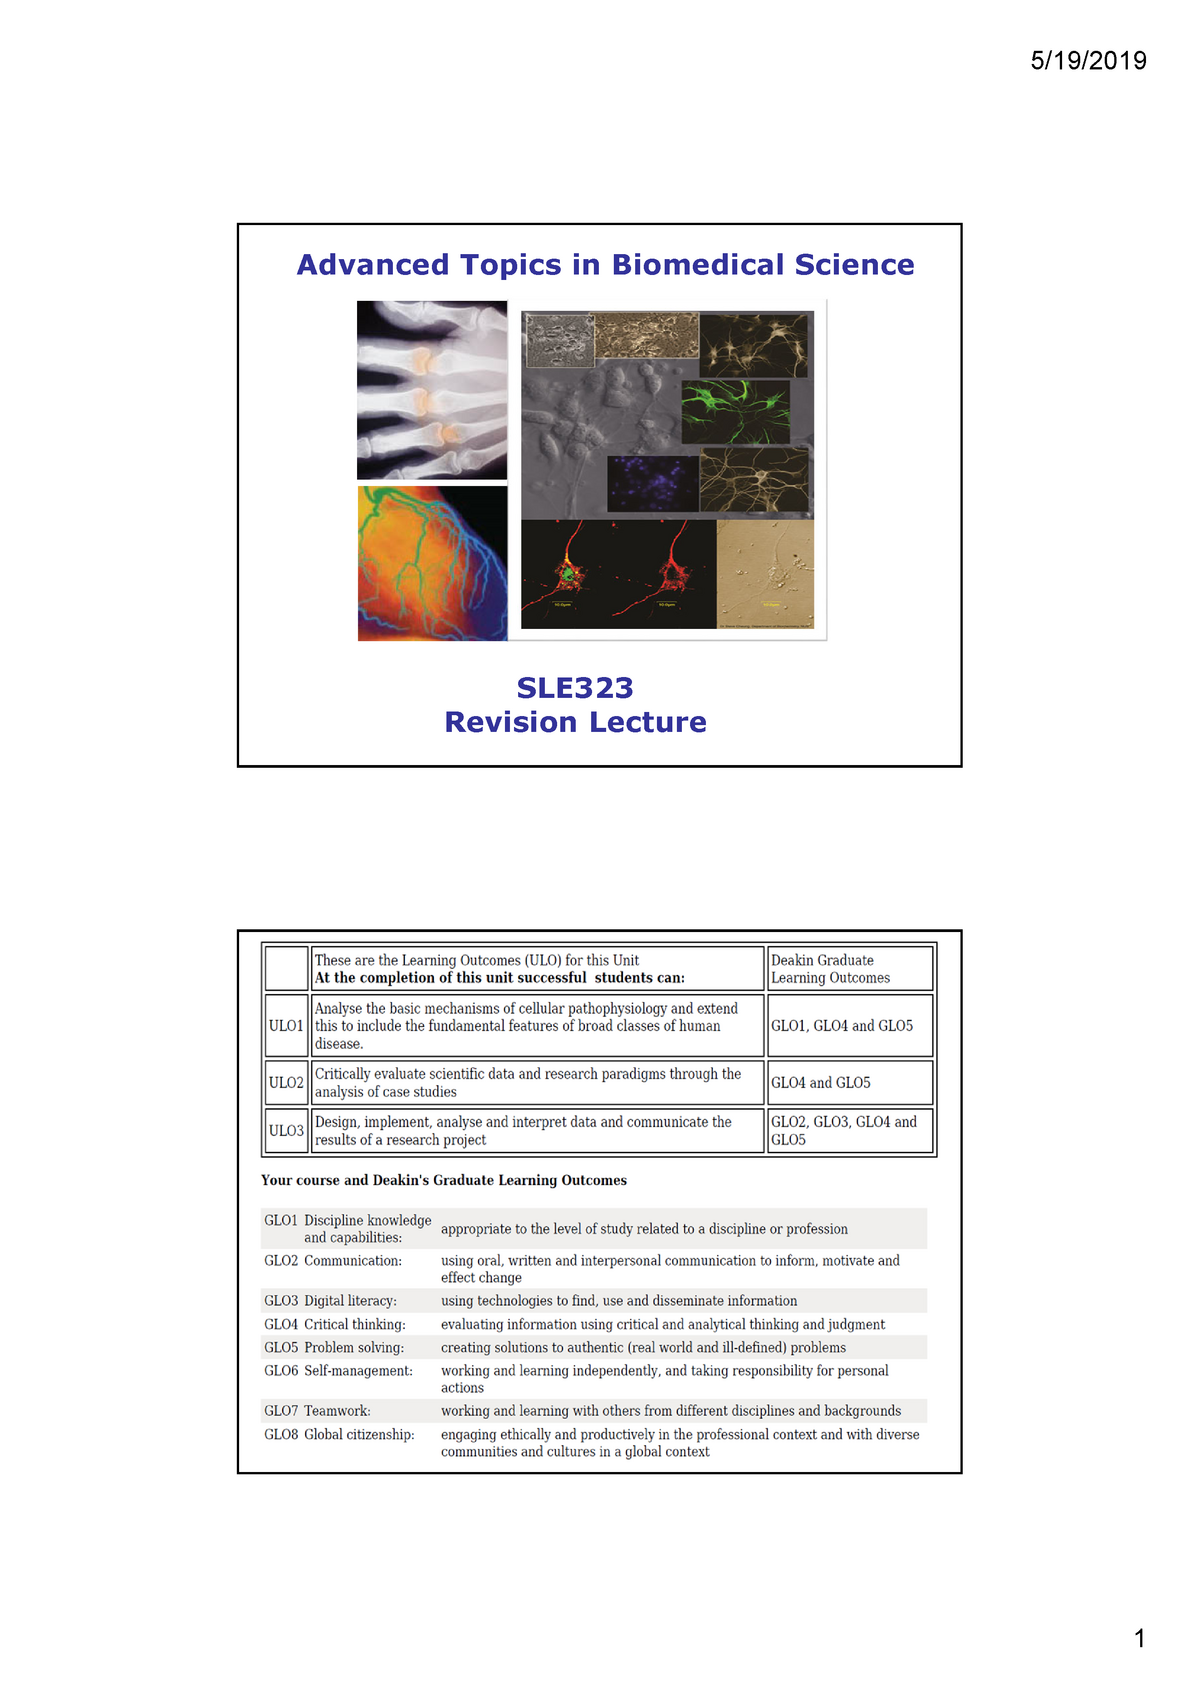 dissertation topics biomedical science